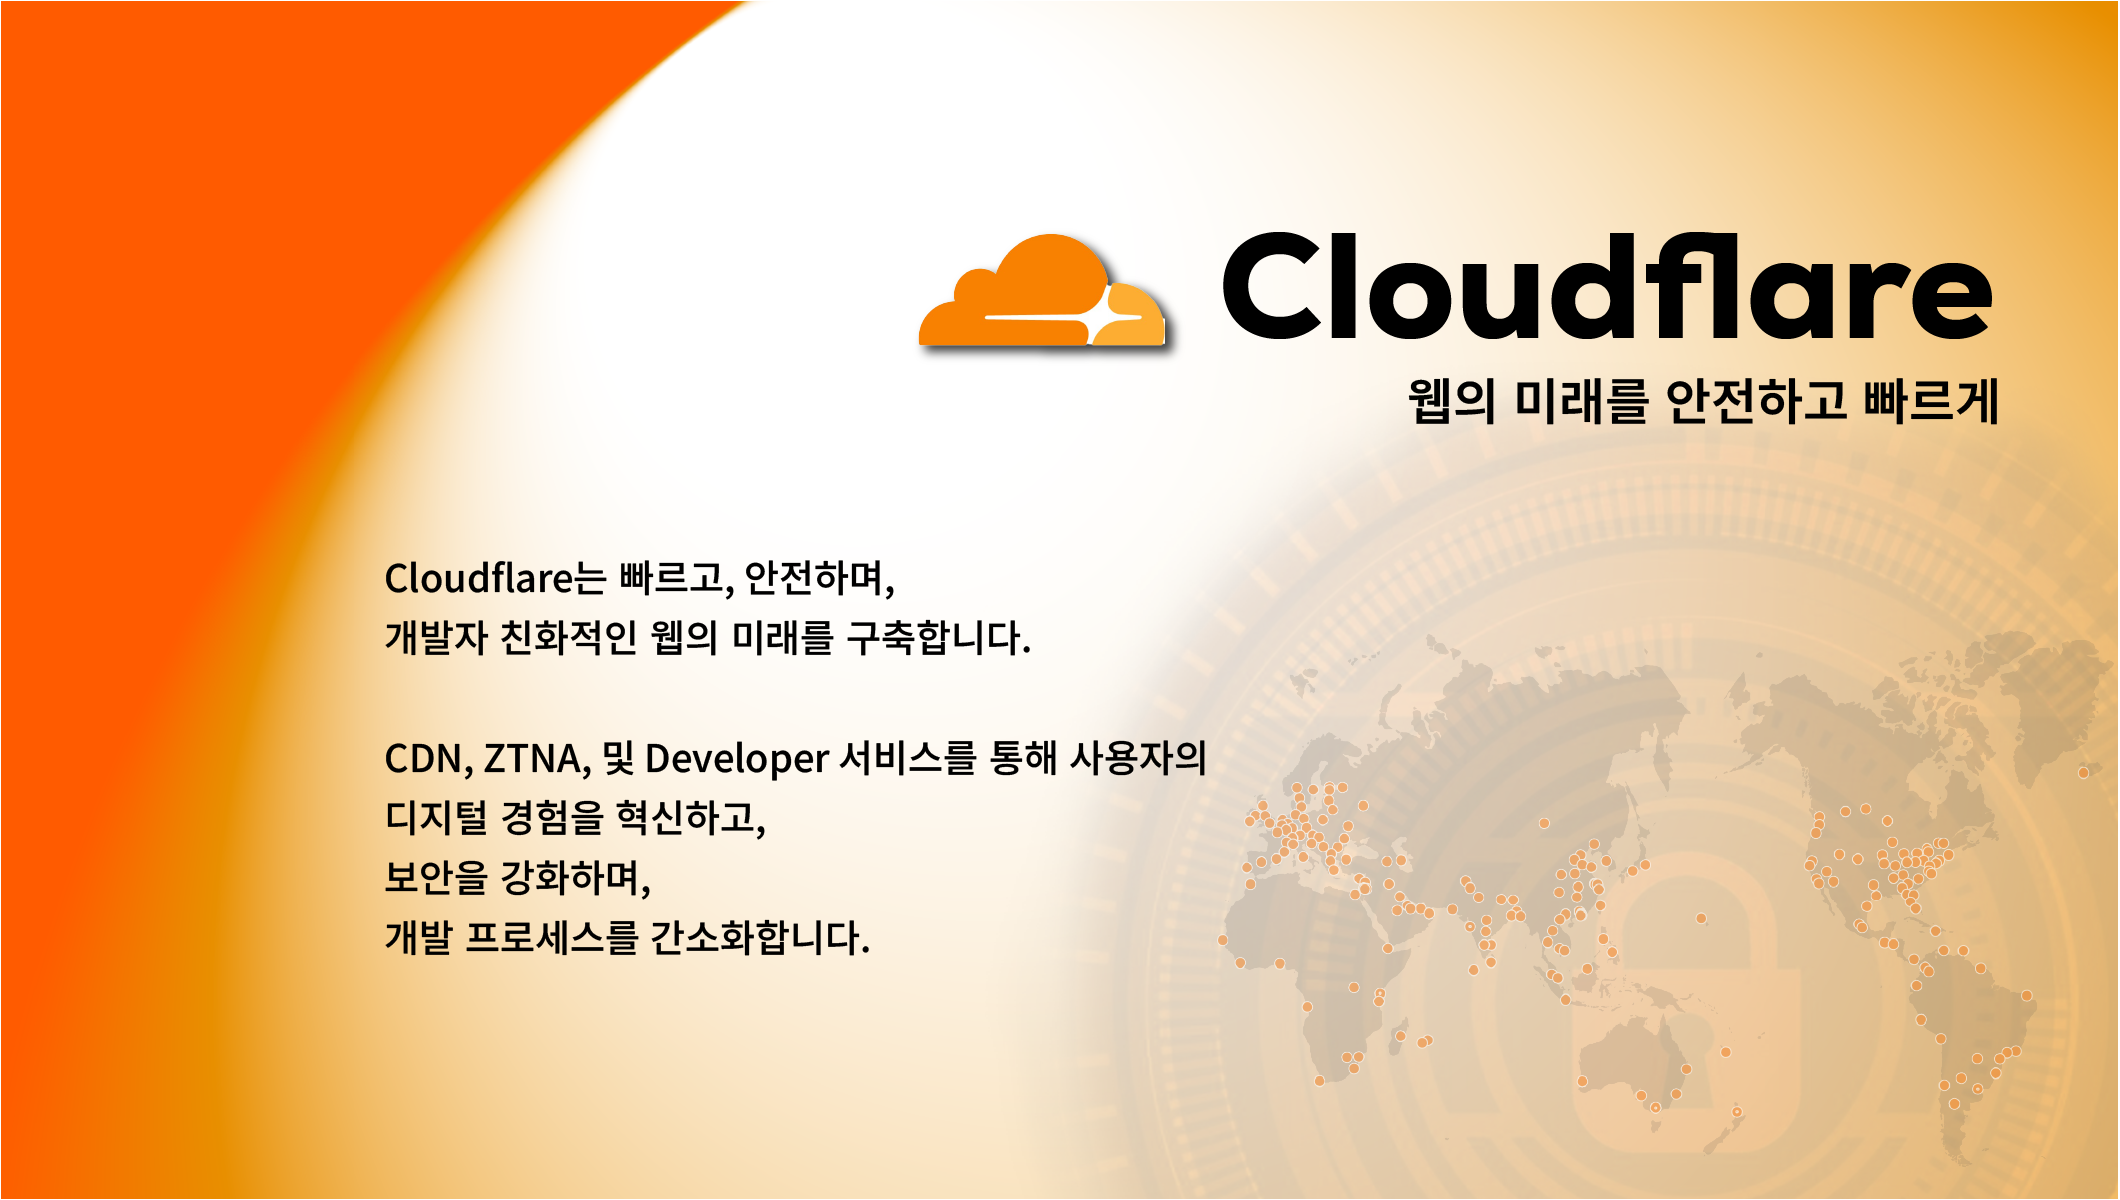 CloudFlare intro Image01